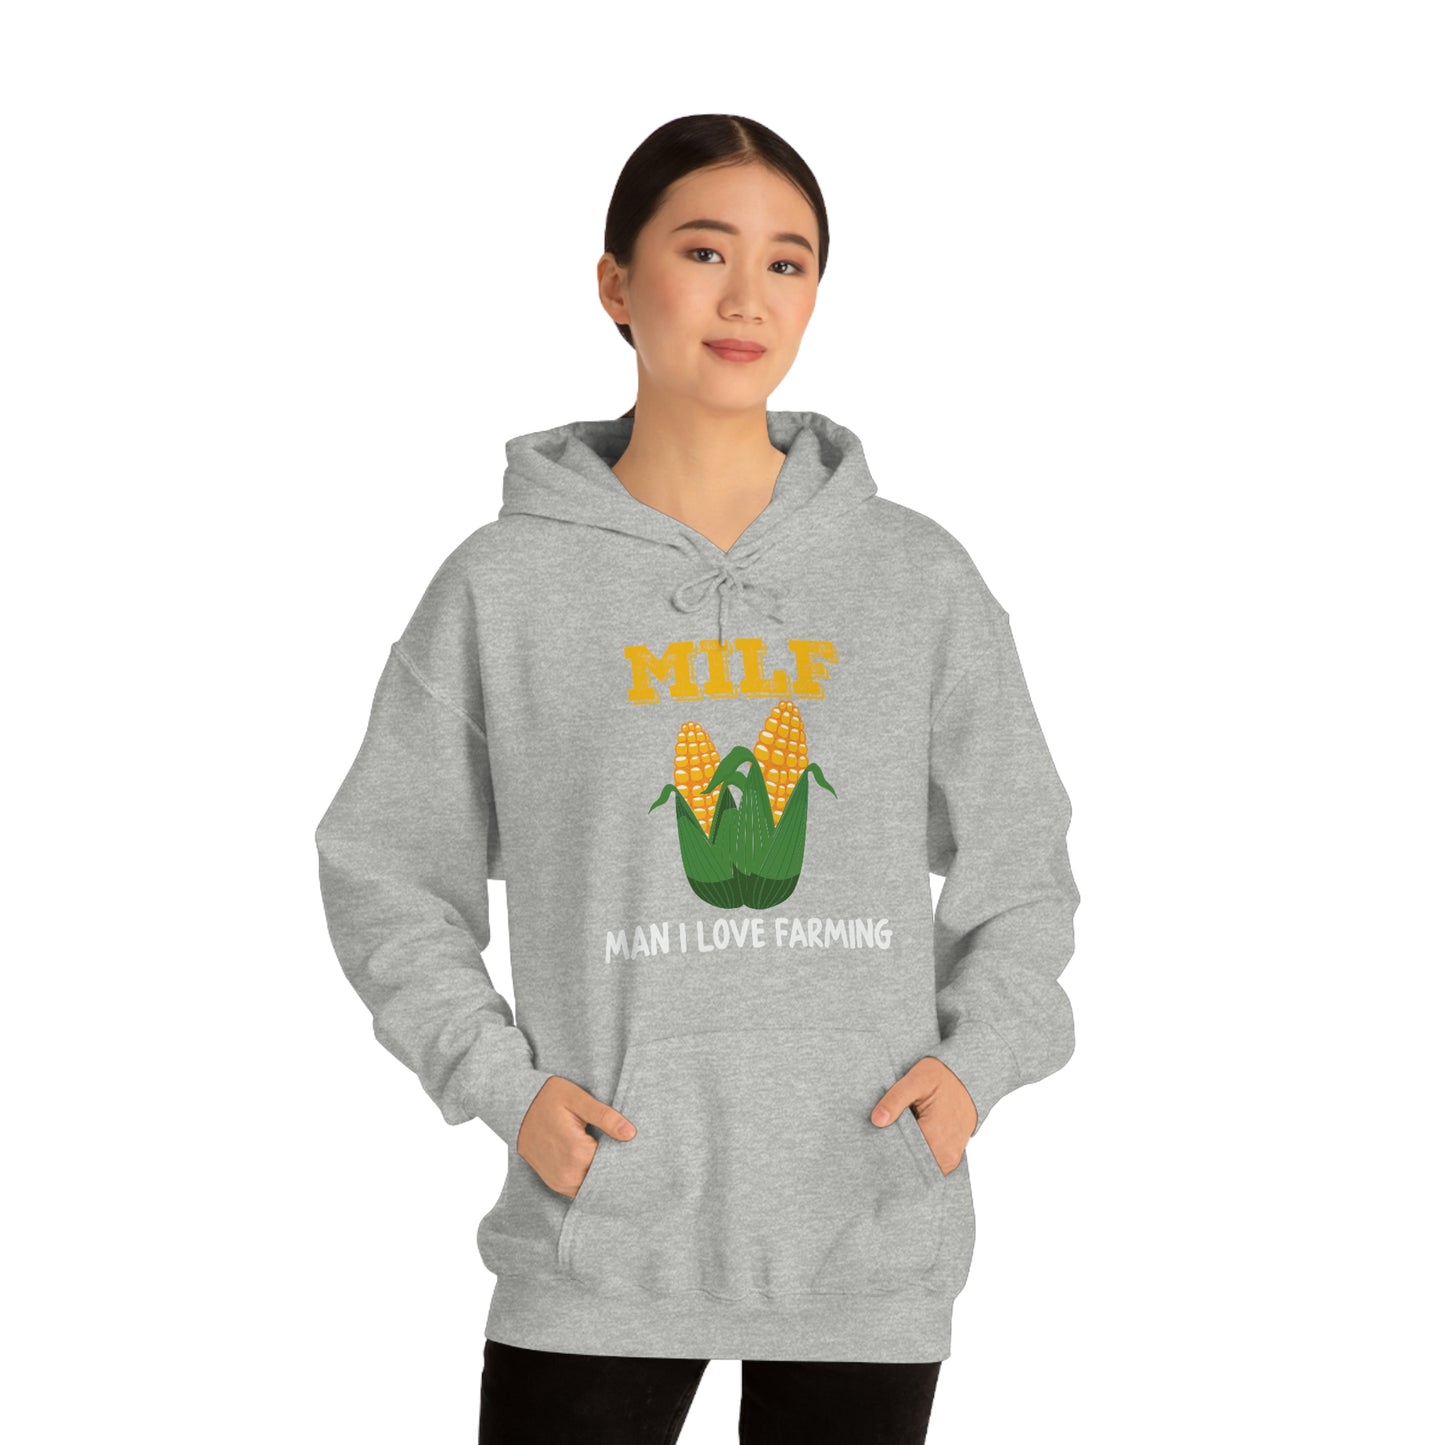 MILF - Man I Love Farming Hooded Sweatshirt